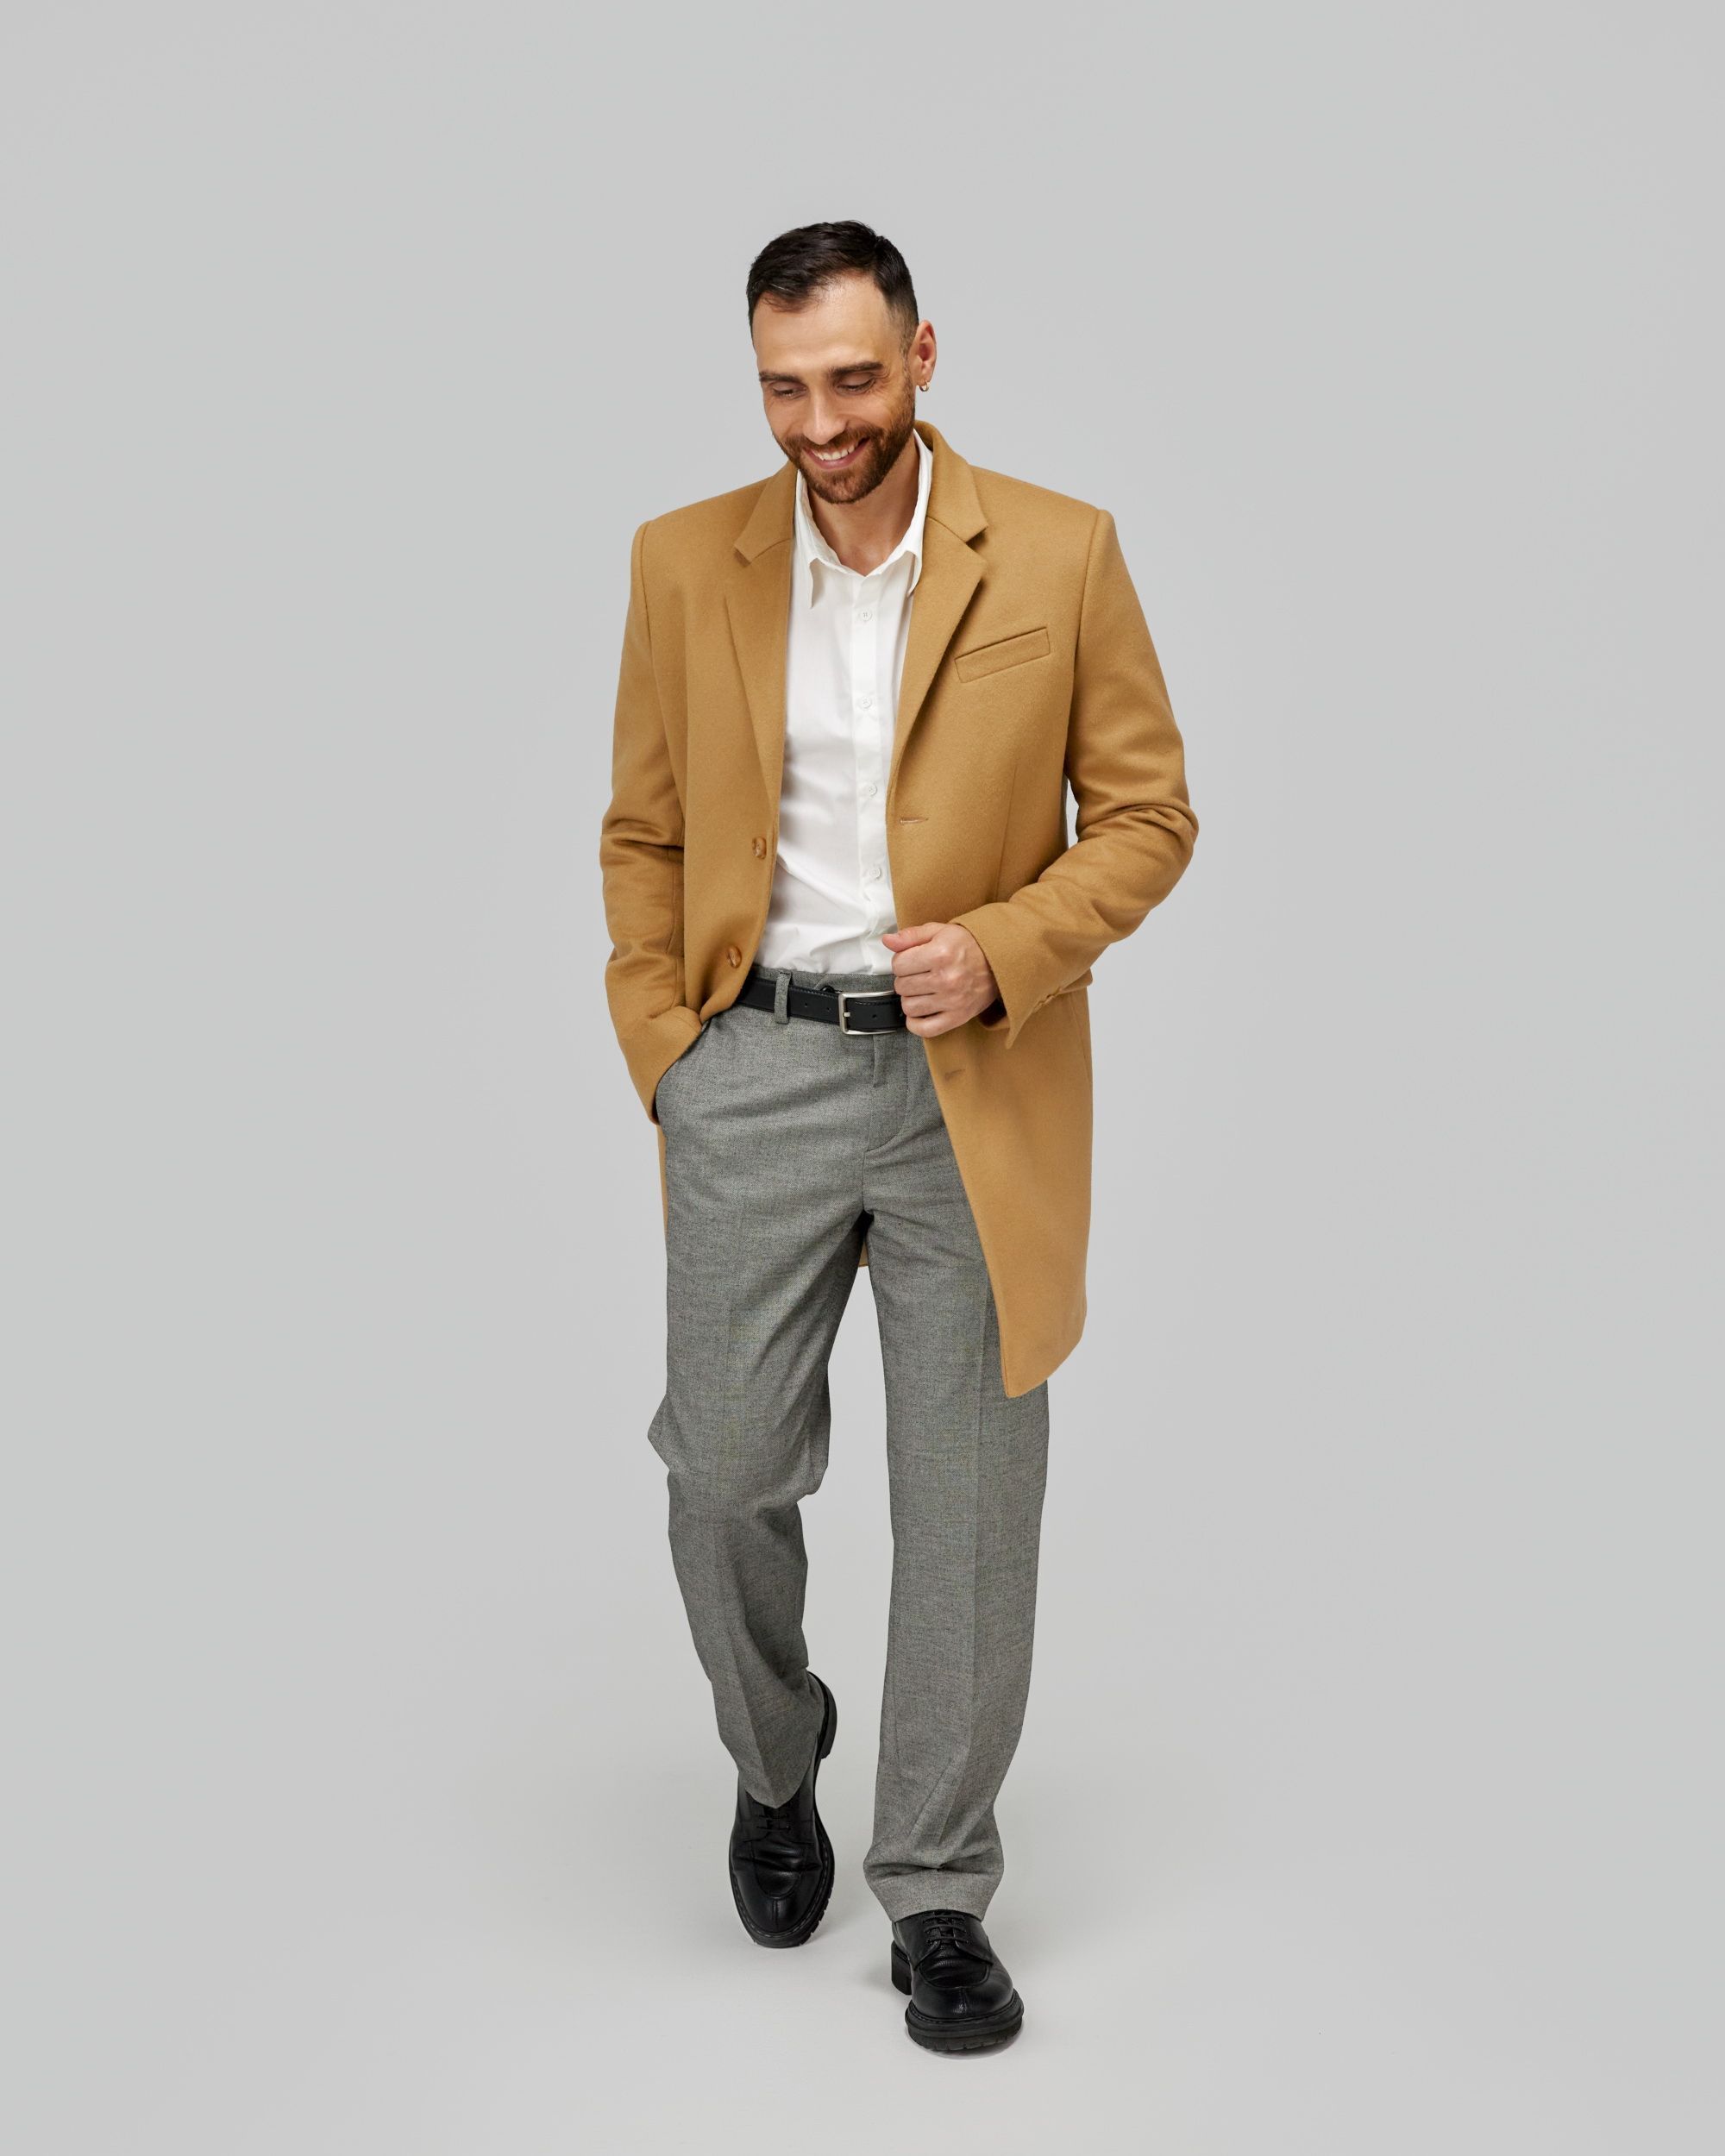 Men's coat, pattern №639 buy on-line